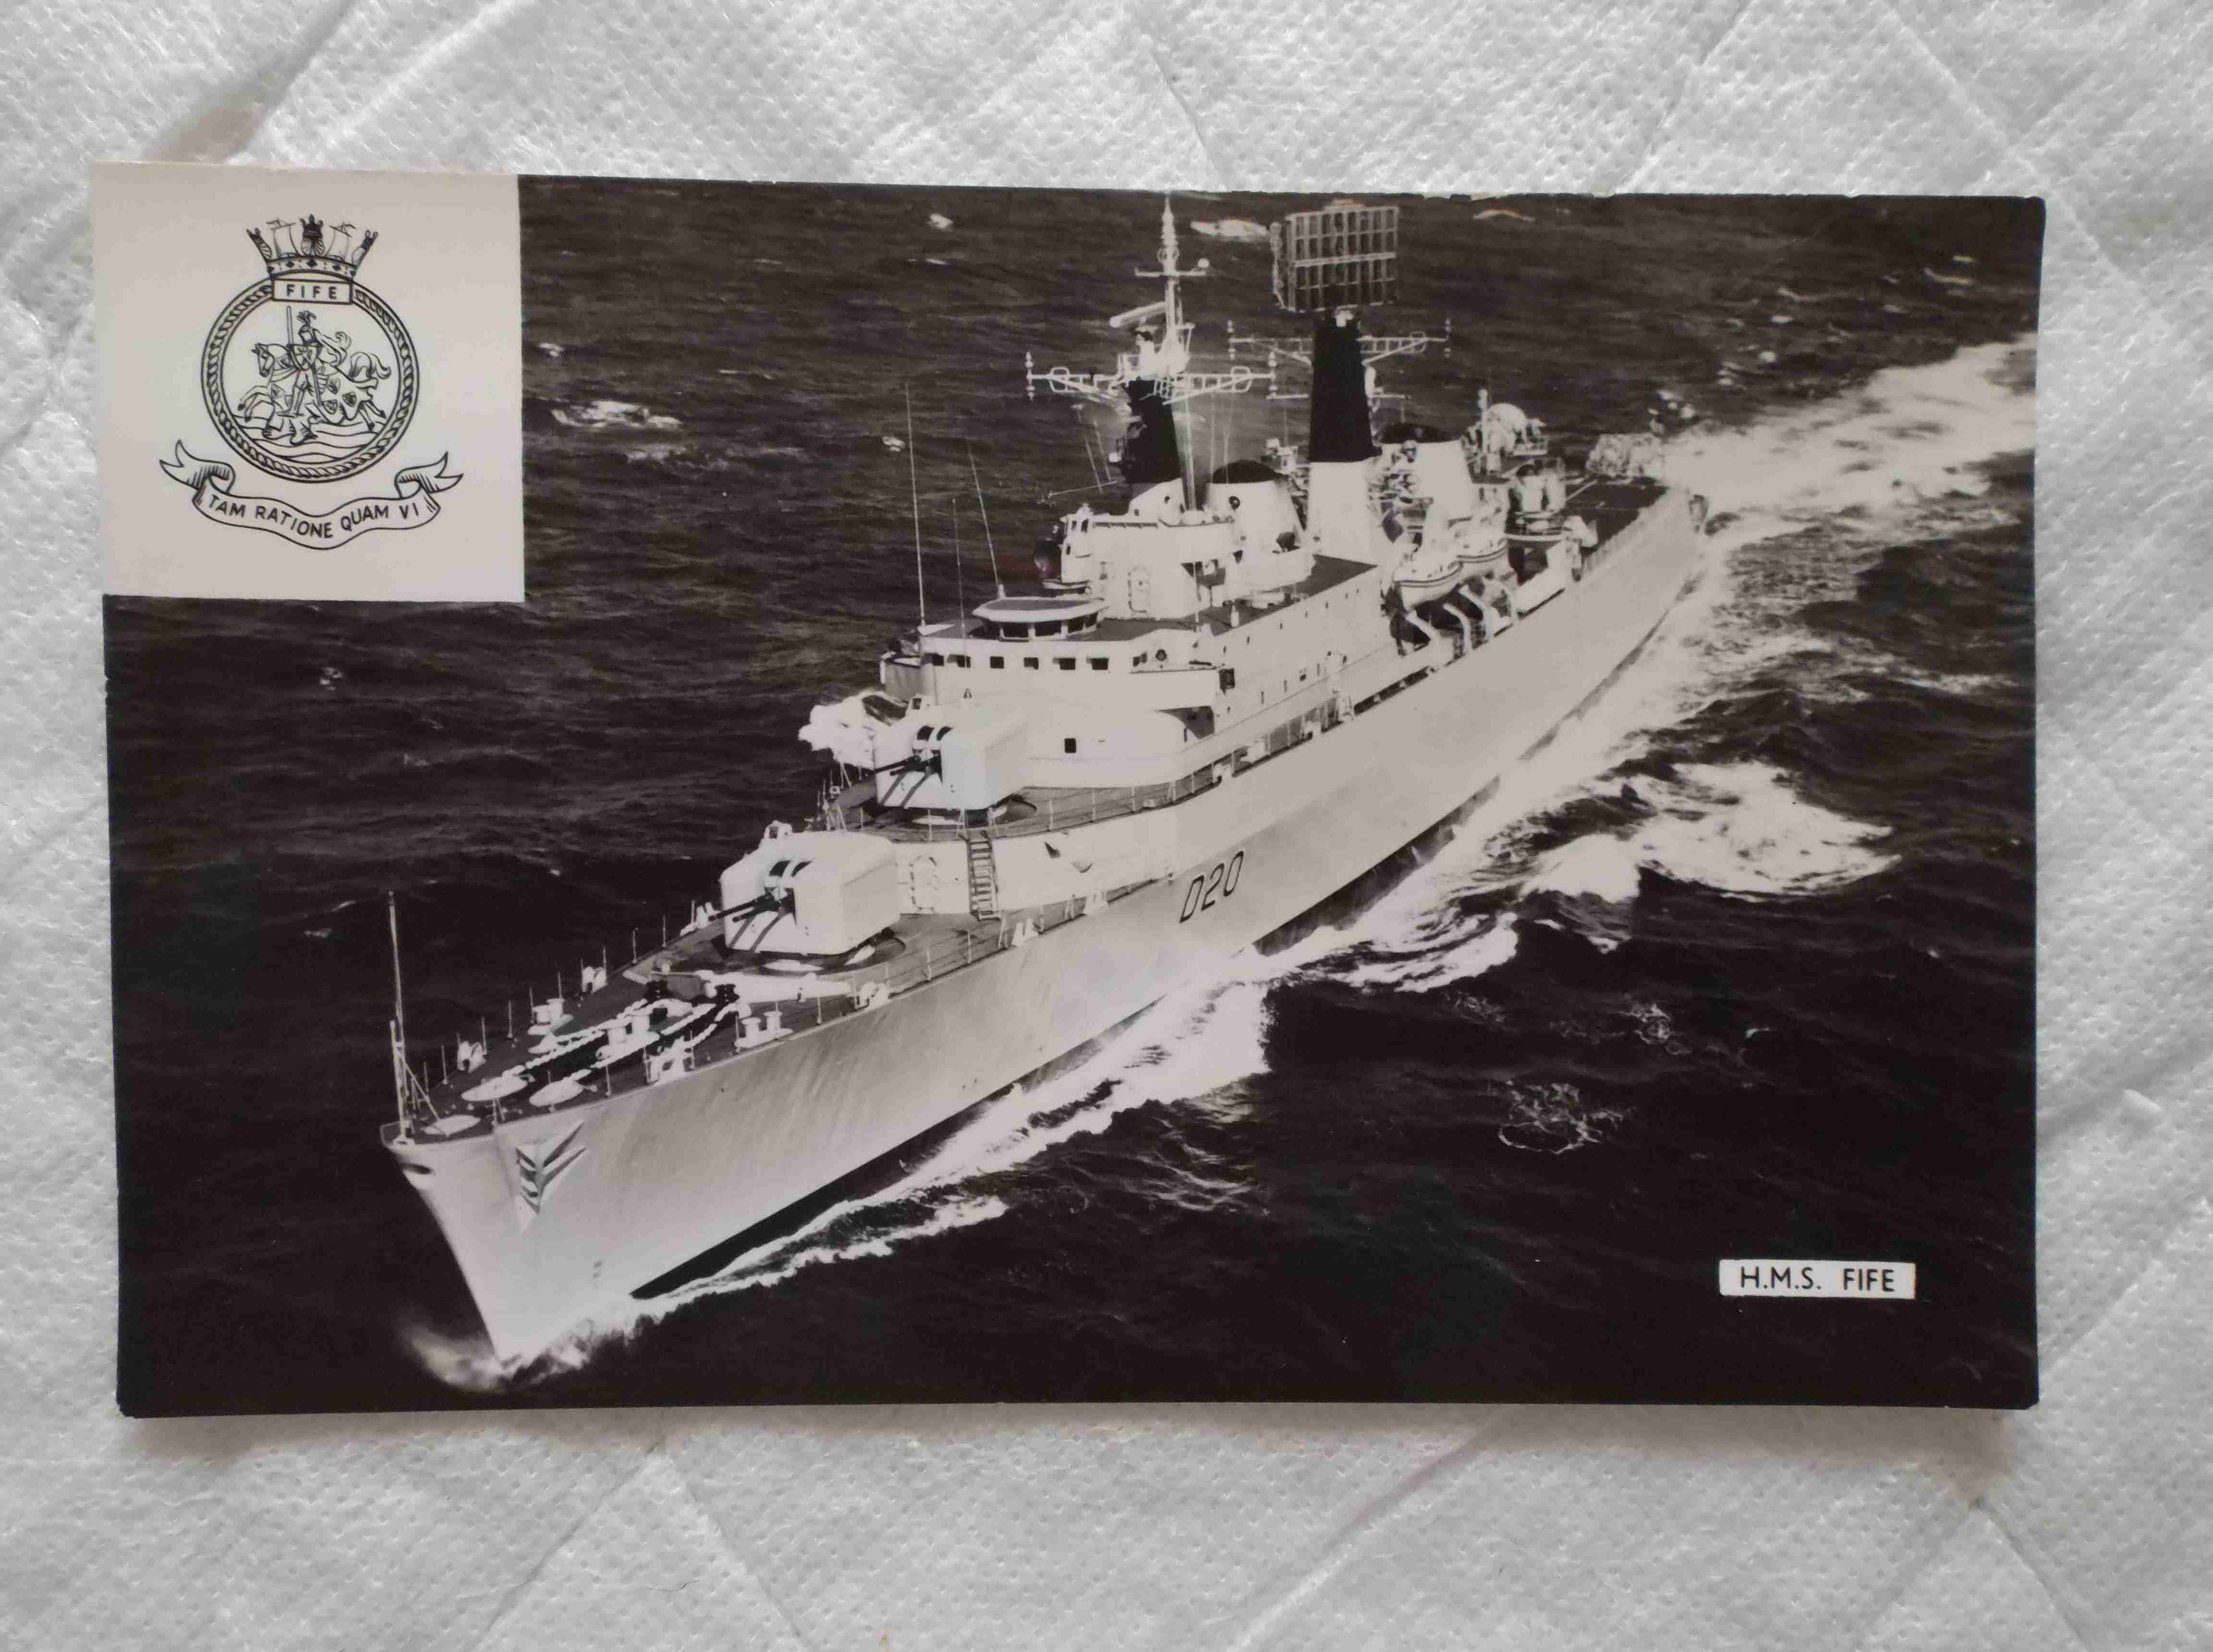 POSTCARD SIZE PHOTOGRAPH  OF THE ROYAL NAVAL VESSEL HMS FIFE